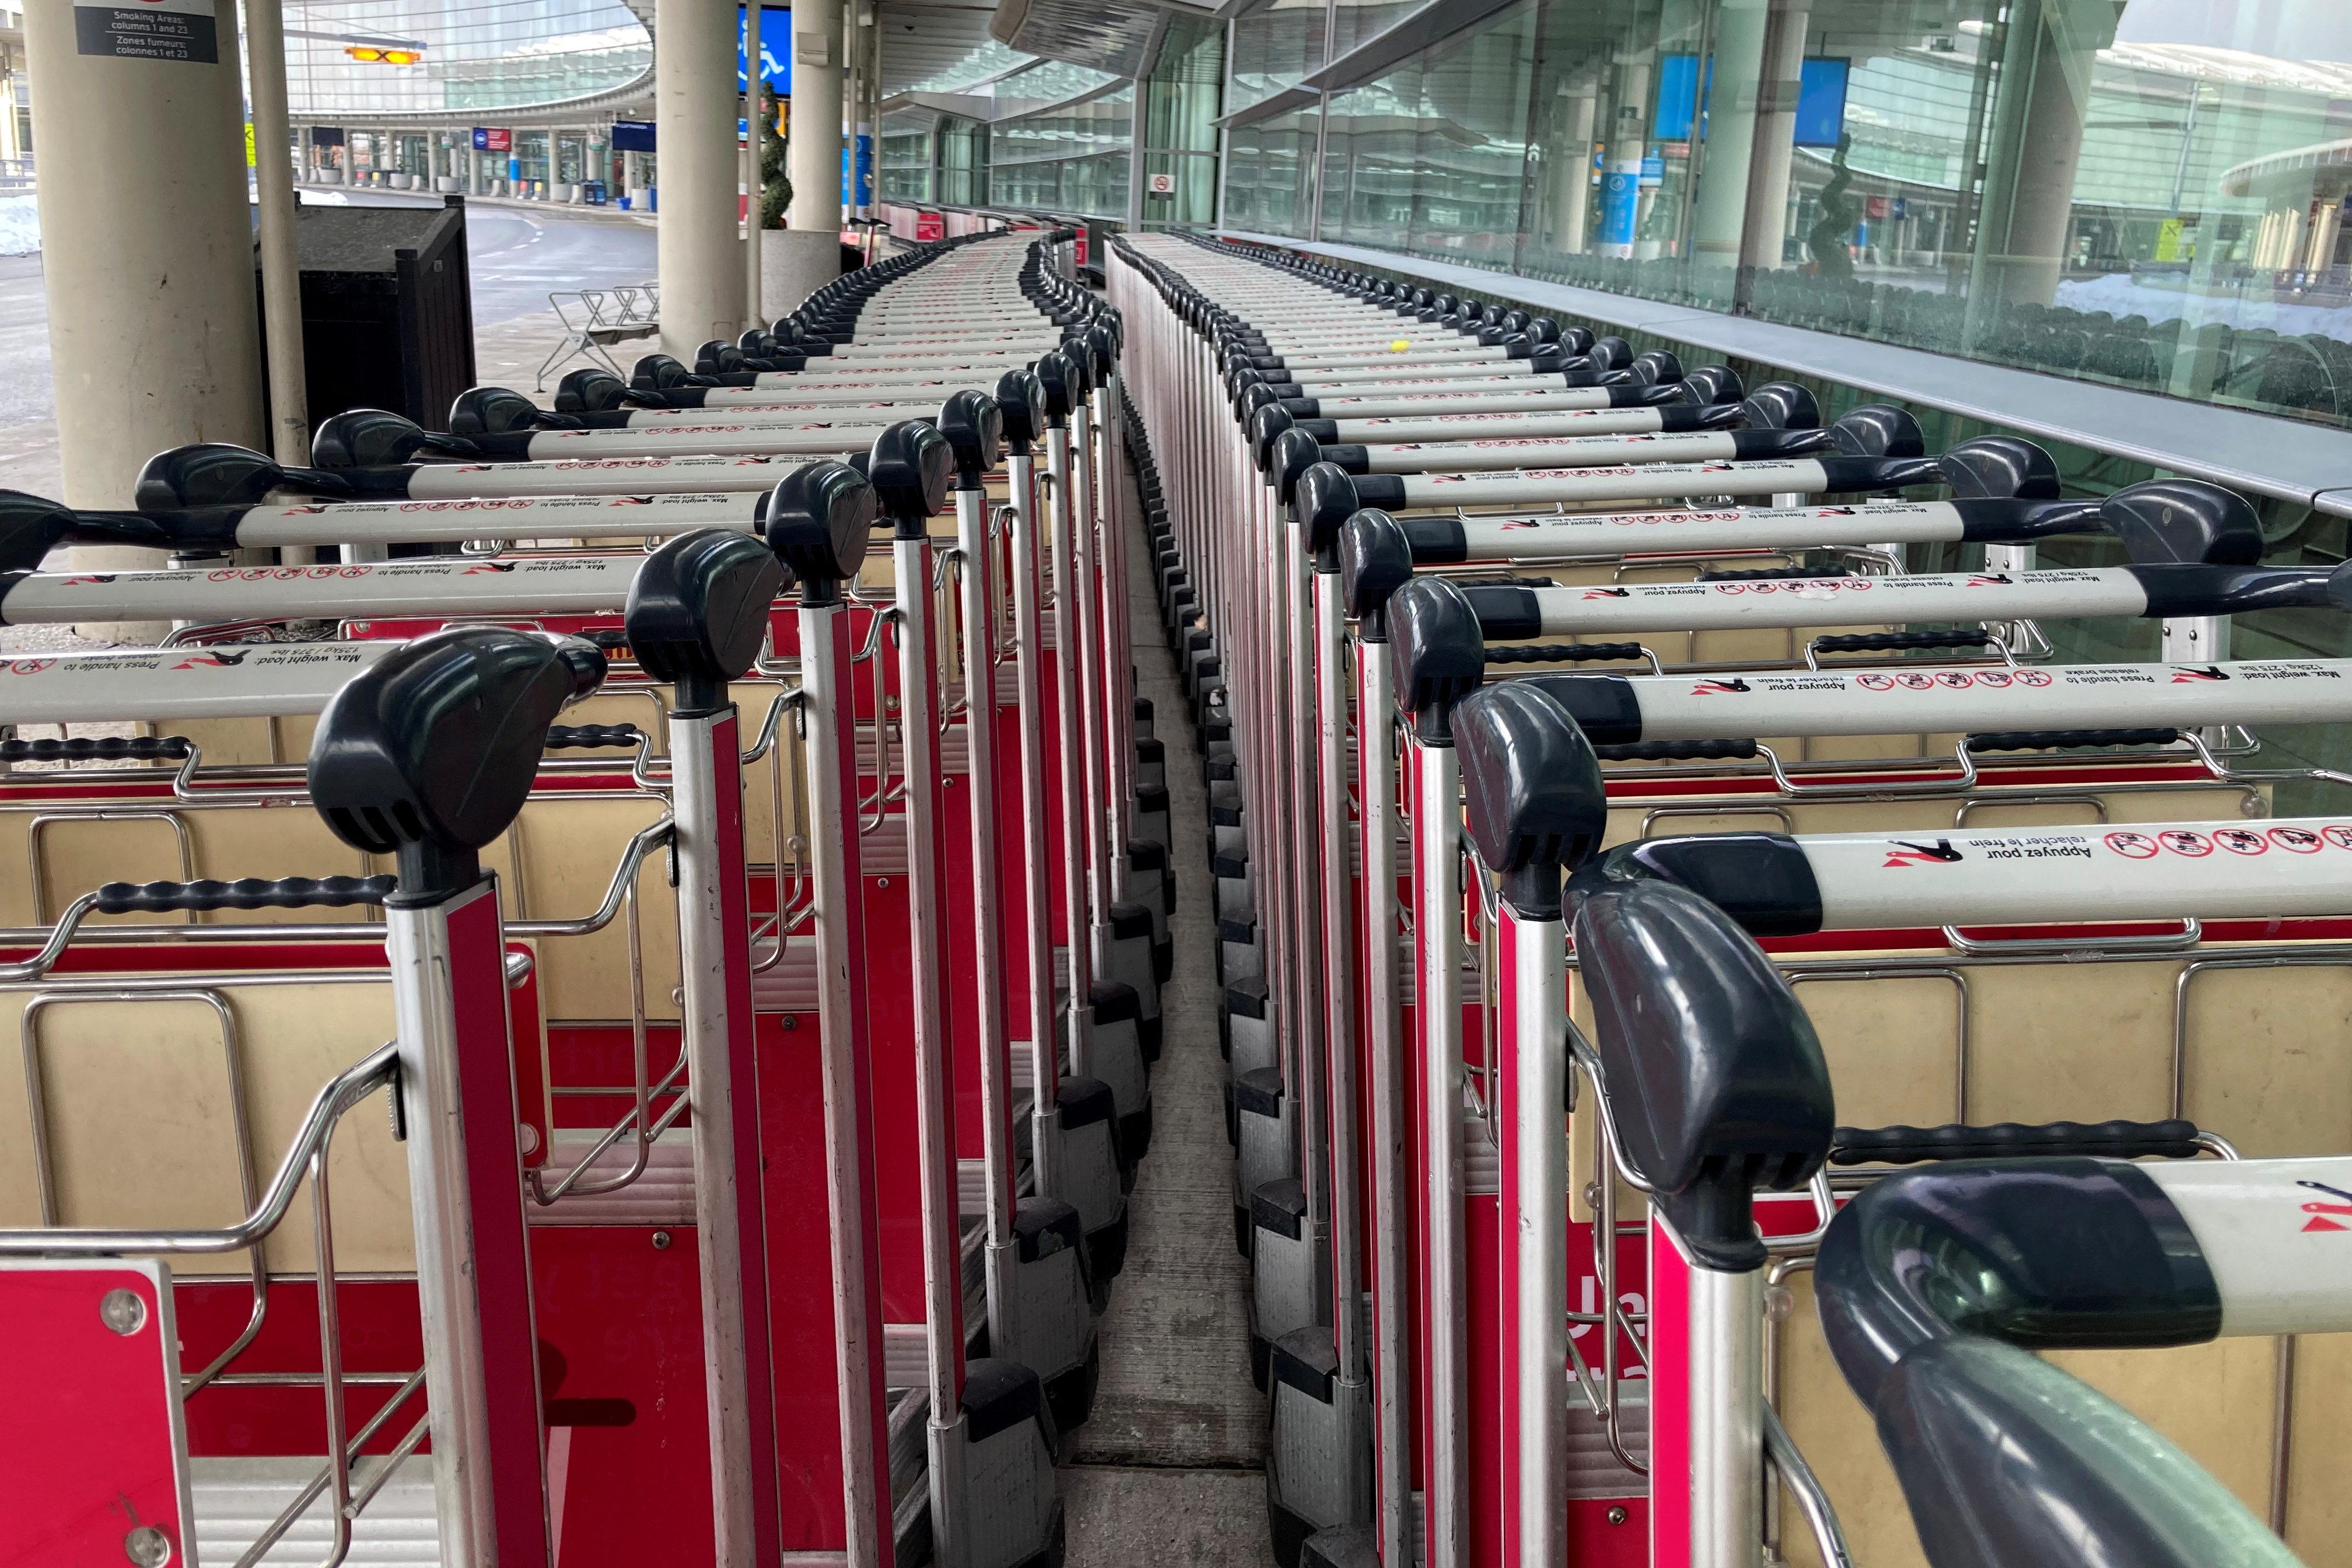 Baggage carts await travellers at Toronto Pearson International Airport in Mississauga, Ontario, Canada February 20, 2021.  REUTERS/Kyaw Soe Oo